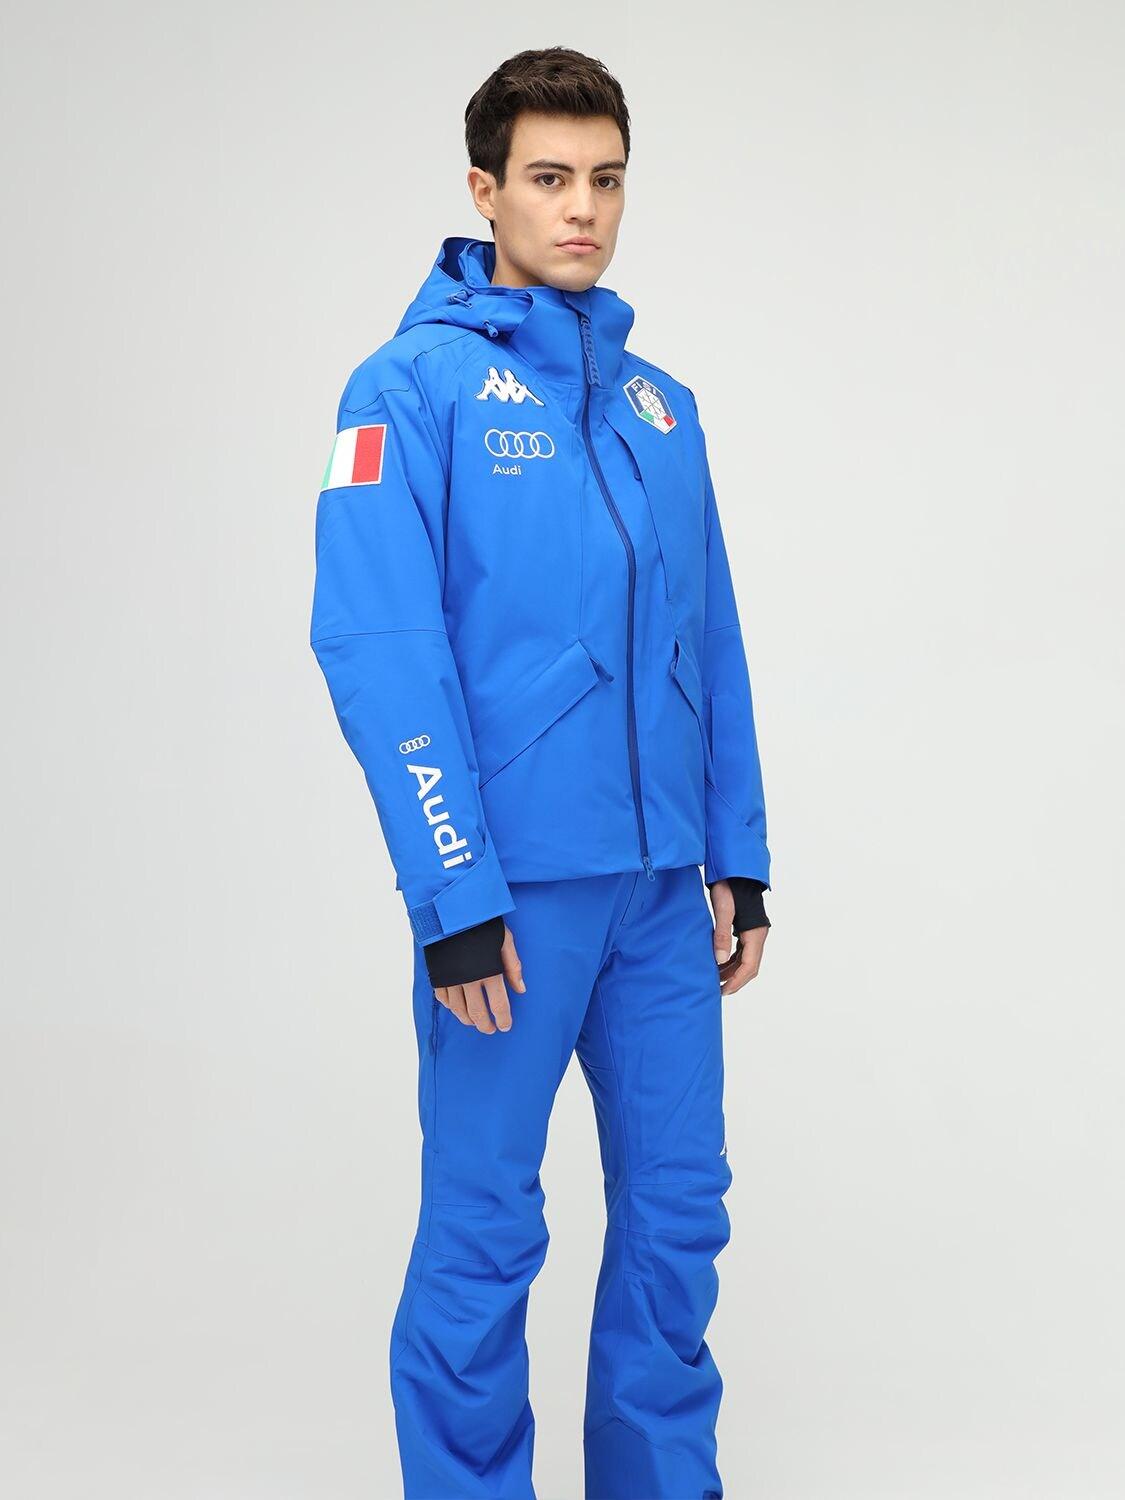 Kappa Fisi Italian Ski Team Pants in Blue for Men - Lyst